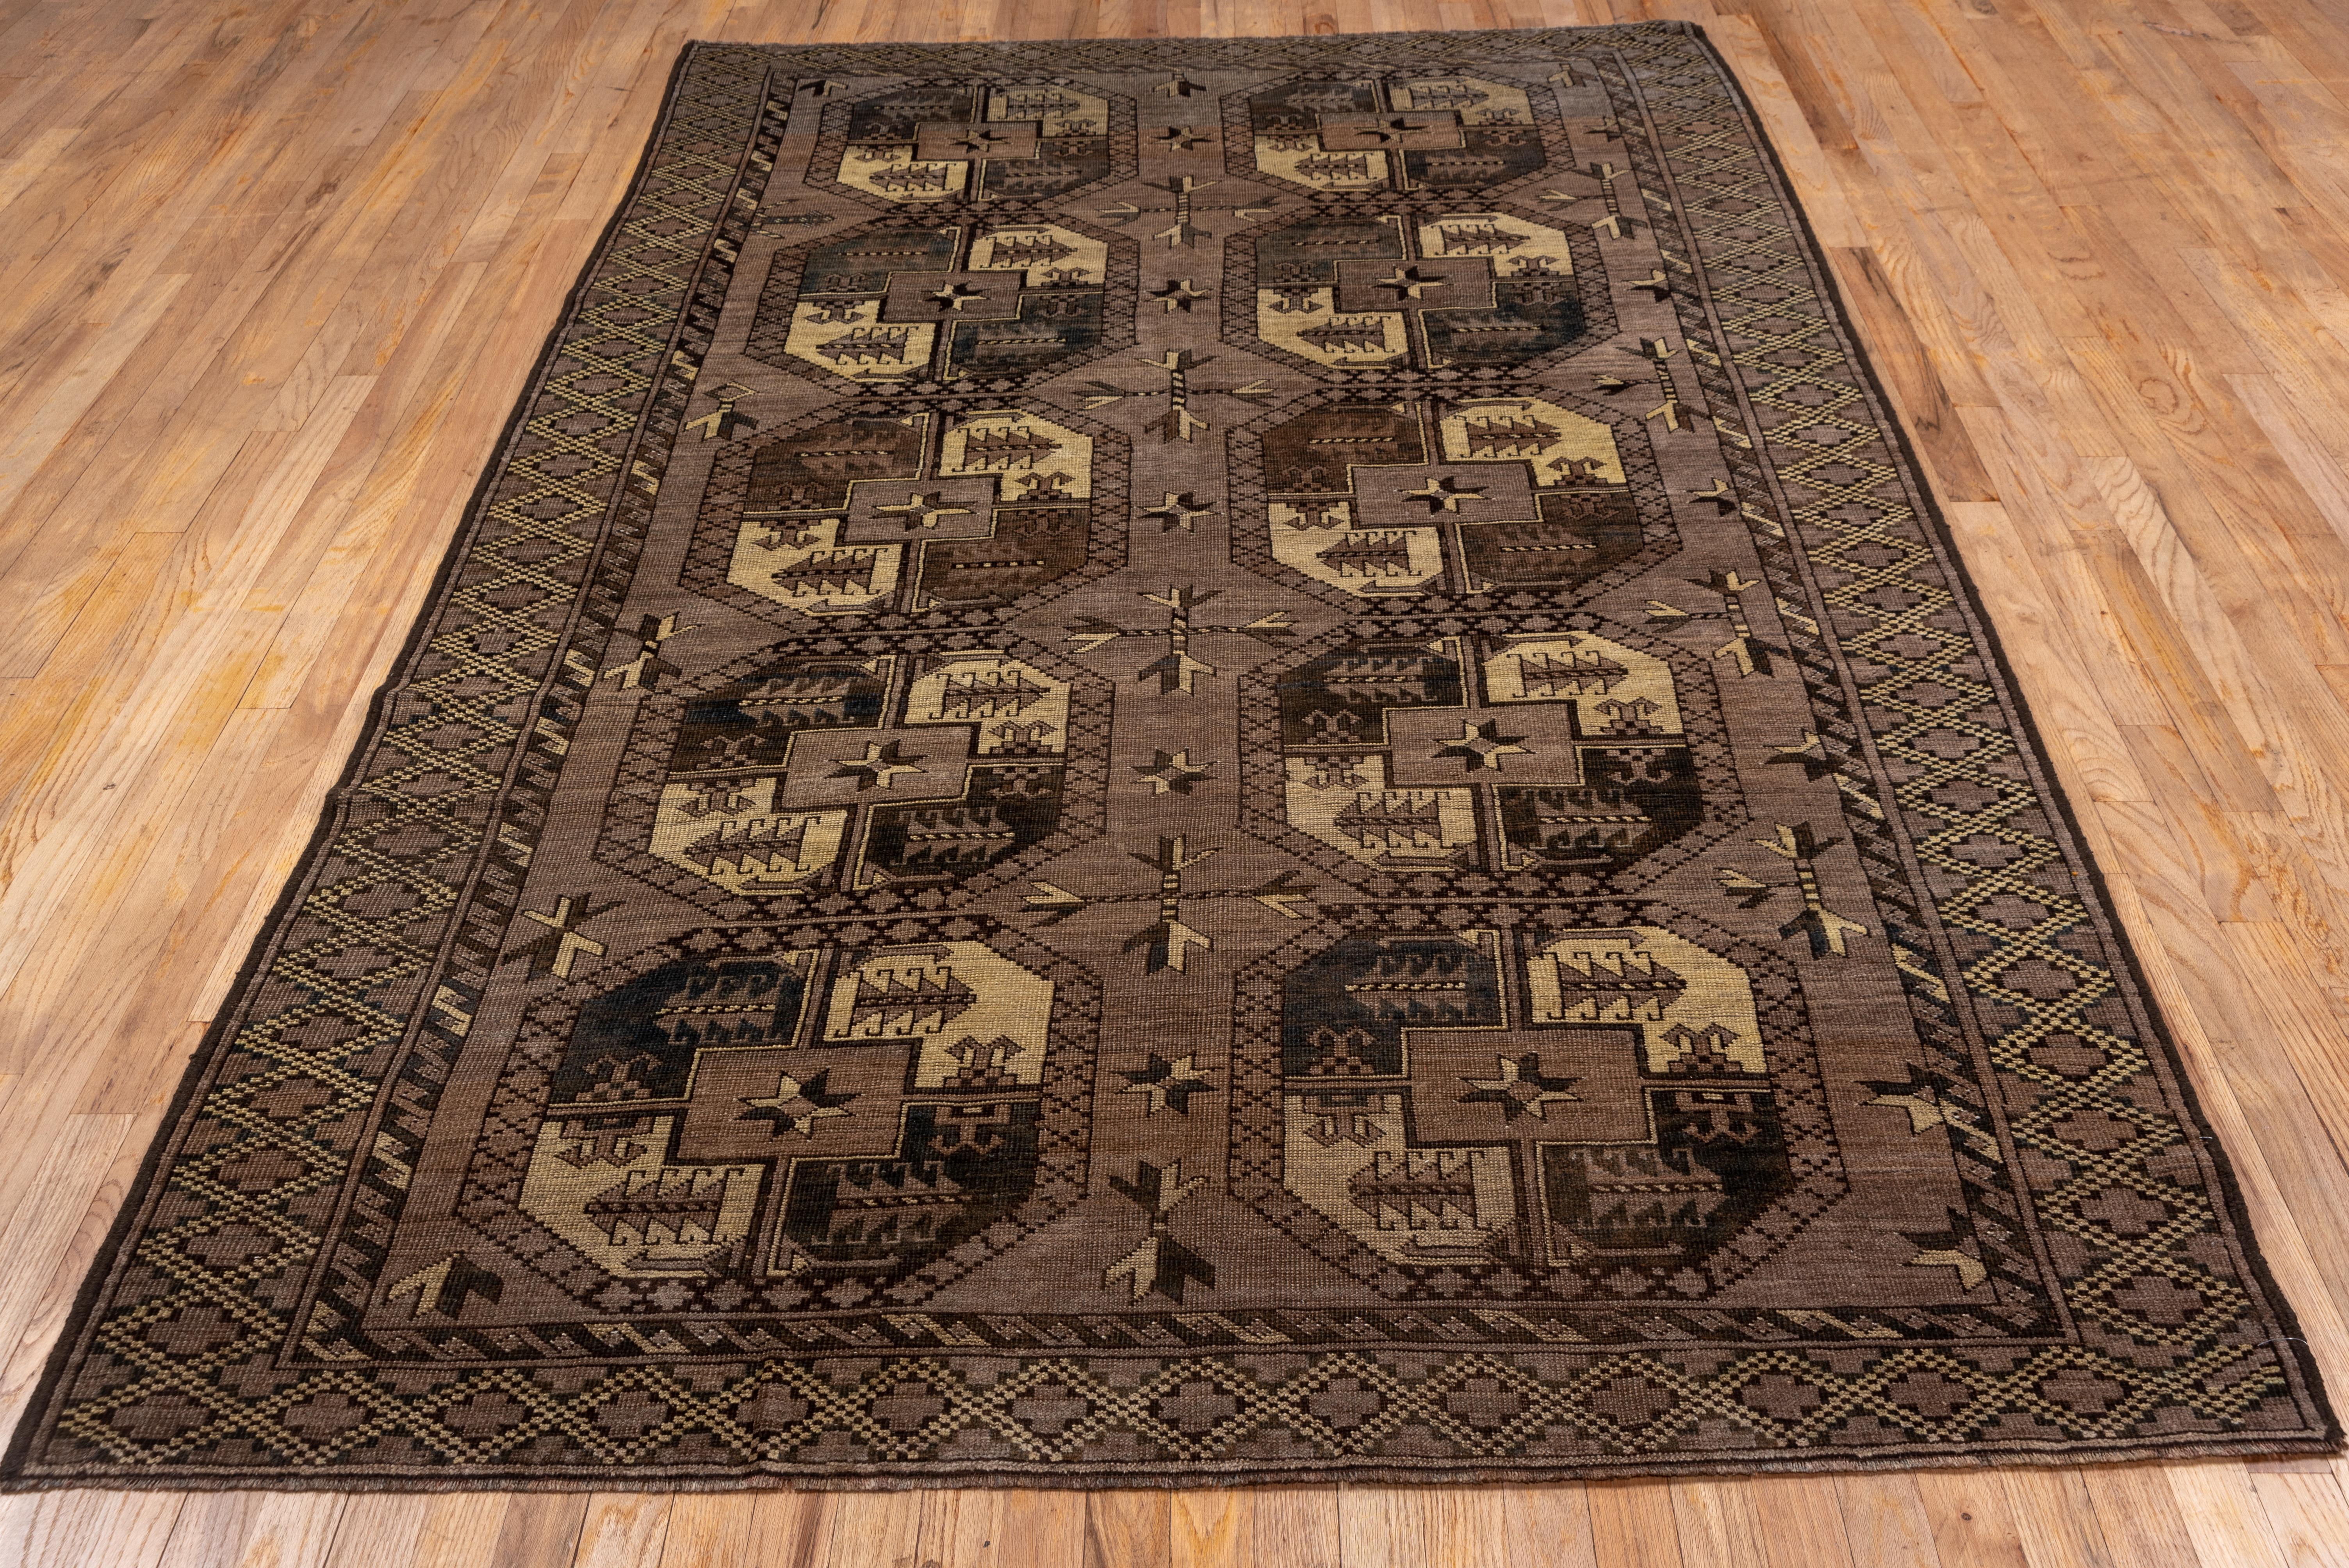 Tribal Antique Brown Afghan Ersari Carpet, Brown Tones, Allover Field, Gold Tones For Sale